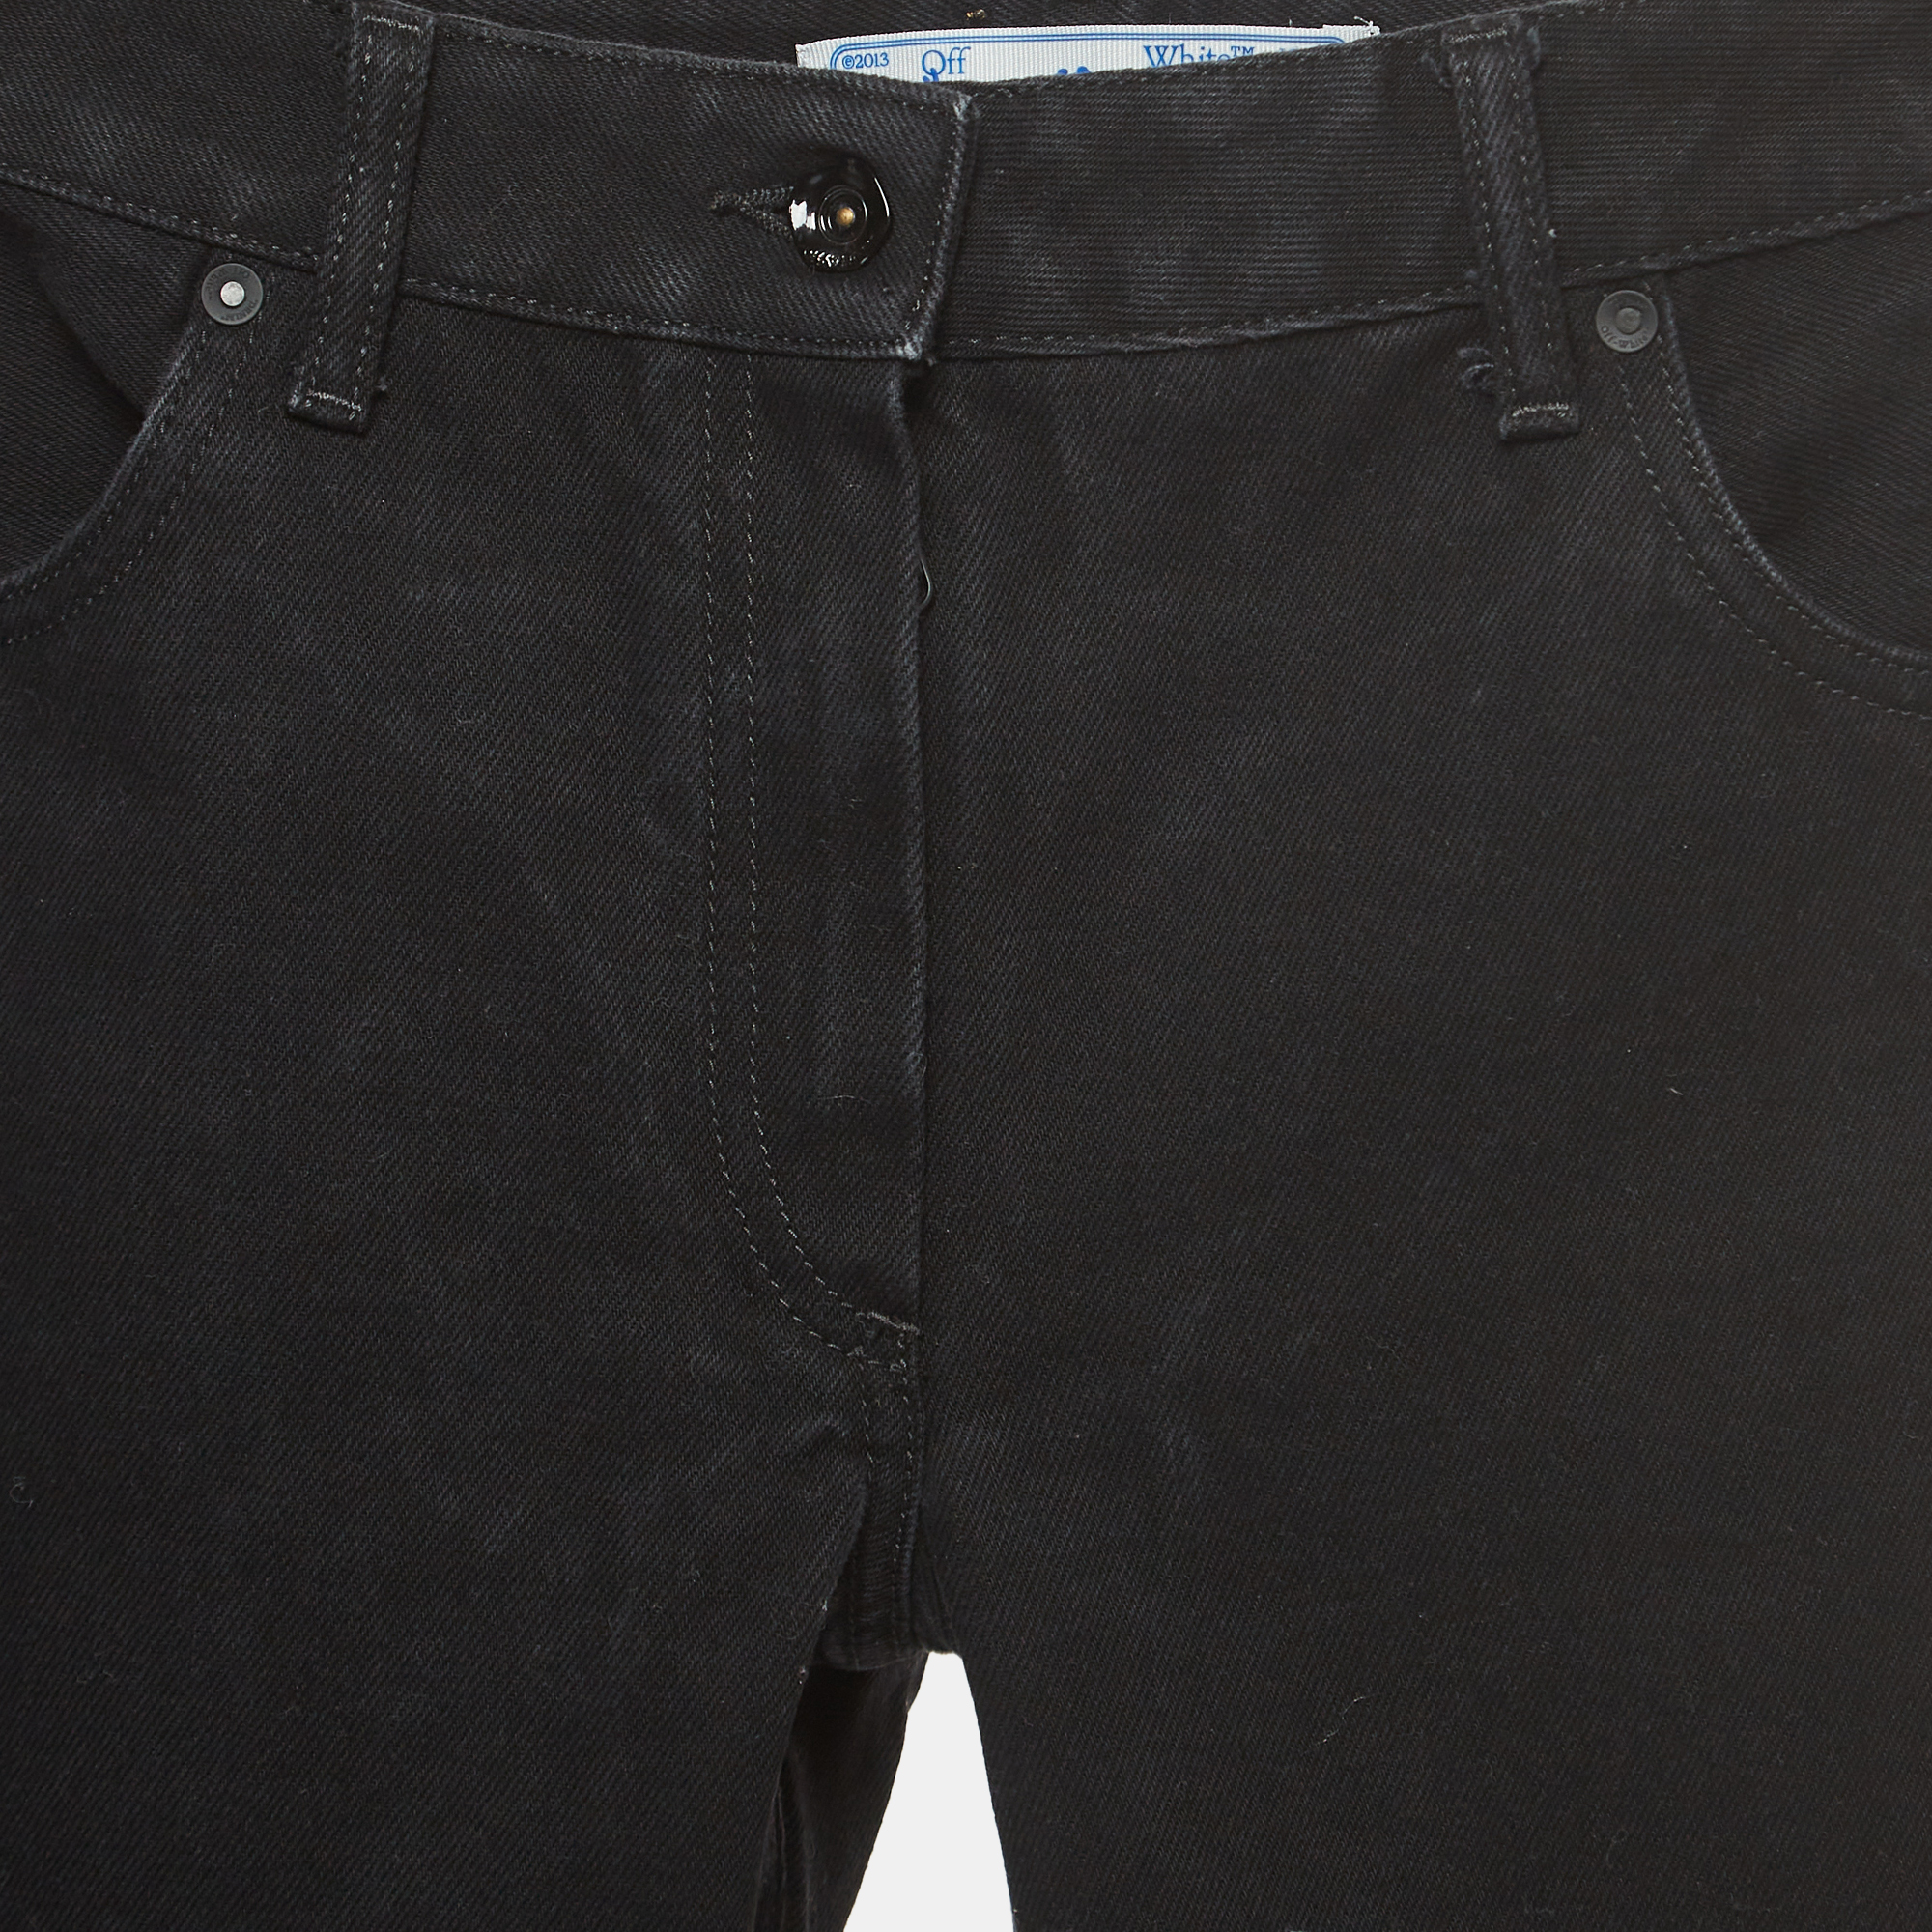 Off-White Black Diagonal Striped Denim High Waist Jeans S Waist 24